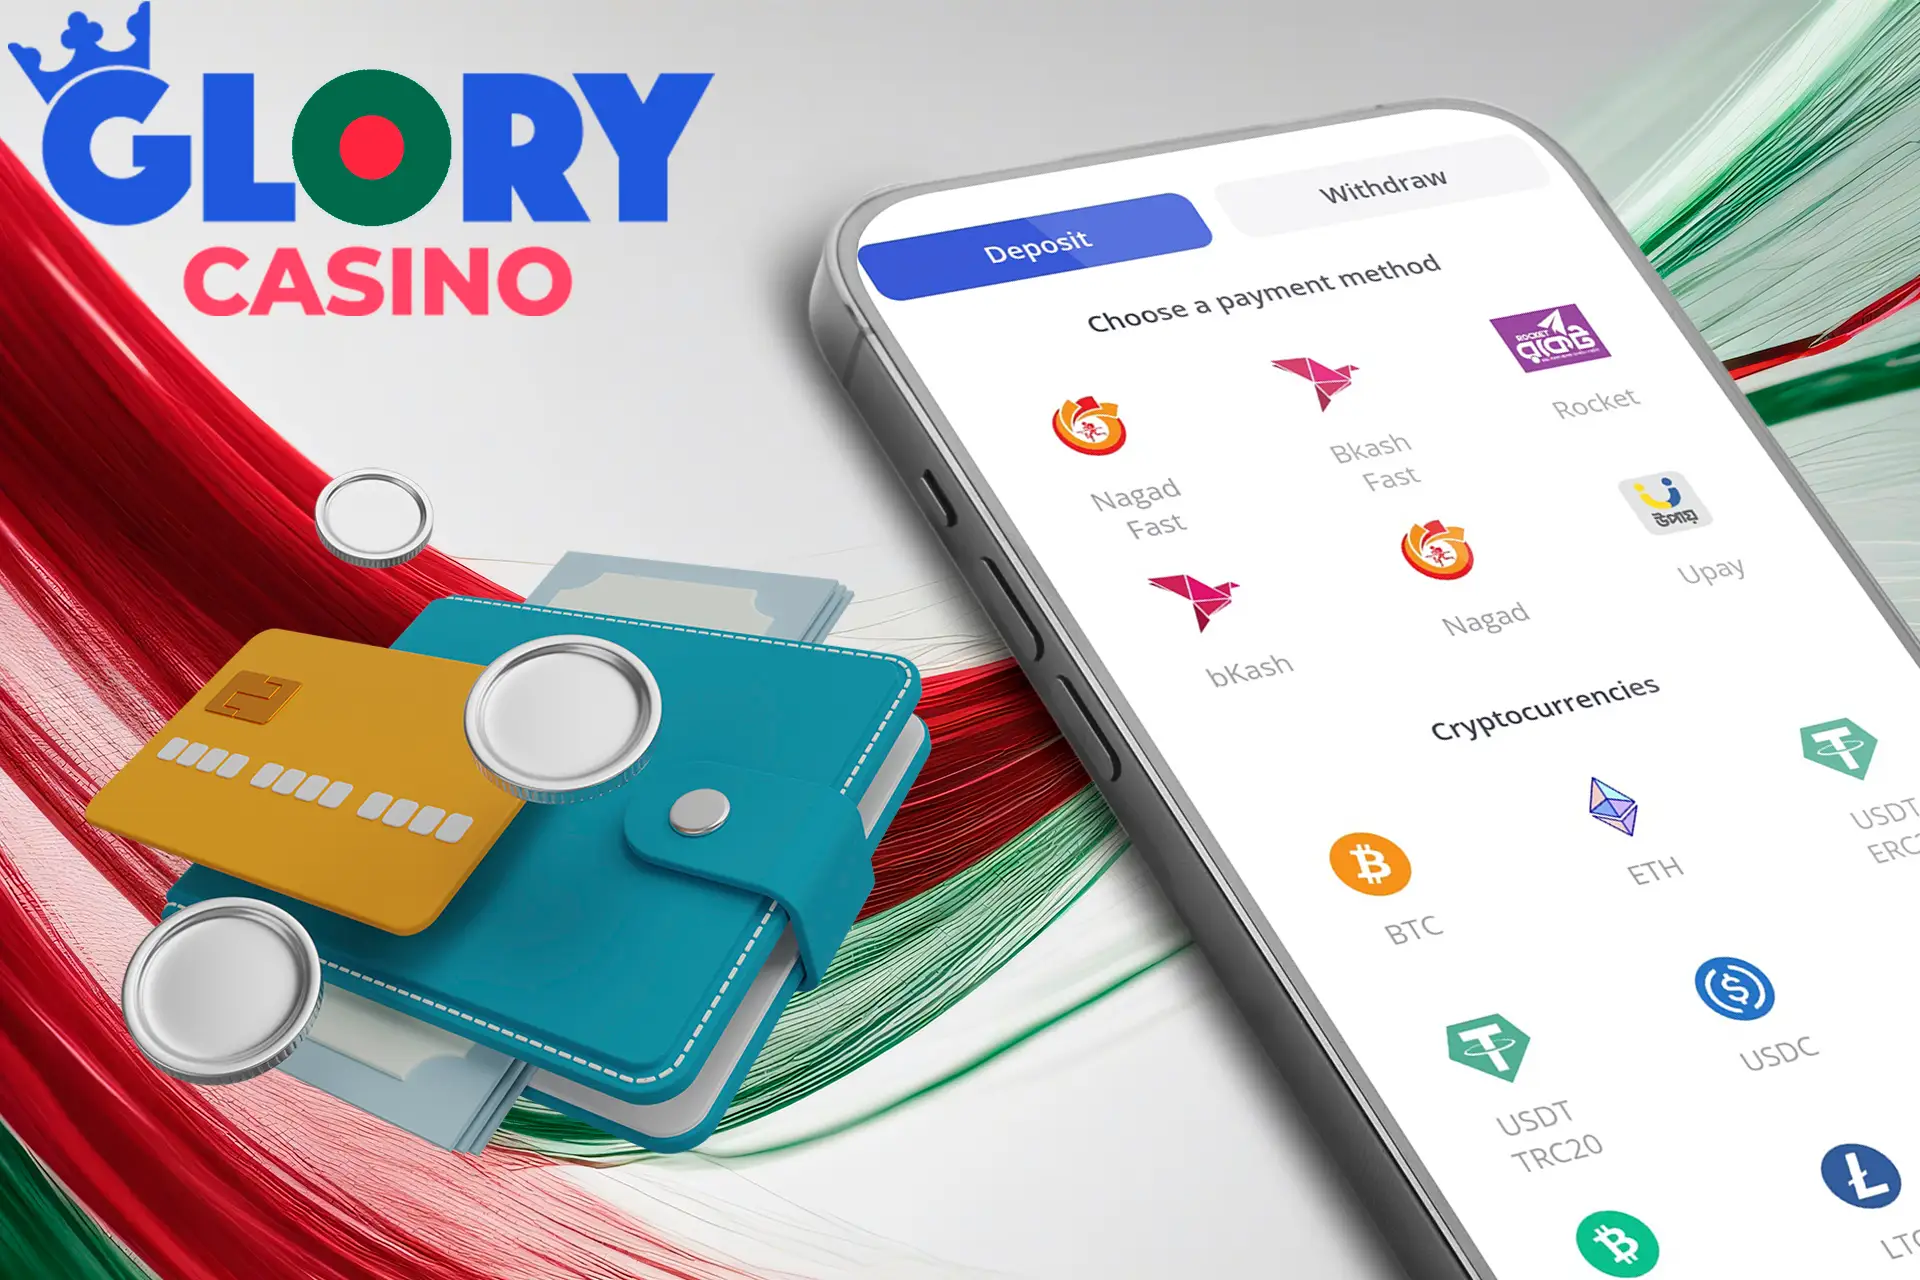 Lots of deposit options at Glory Casino Bangladesh